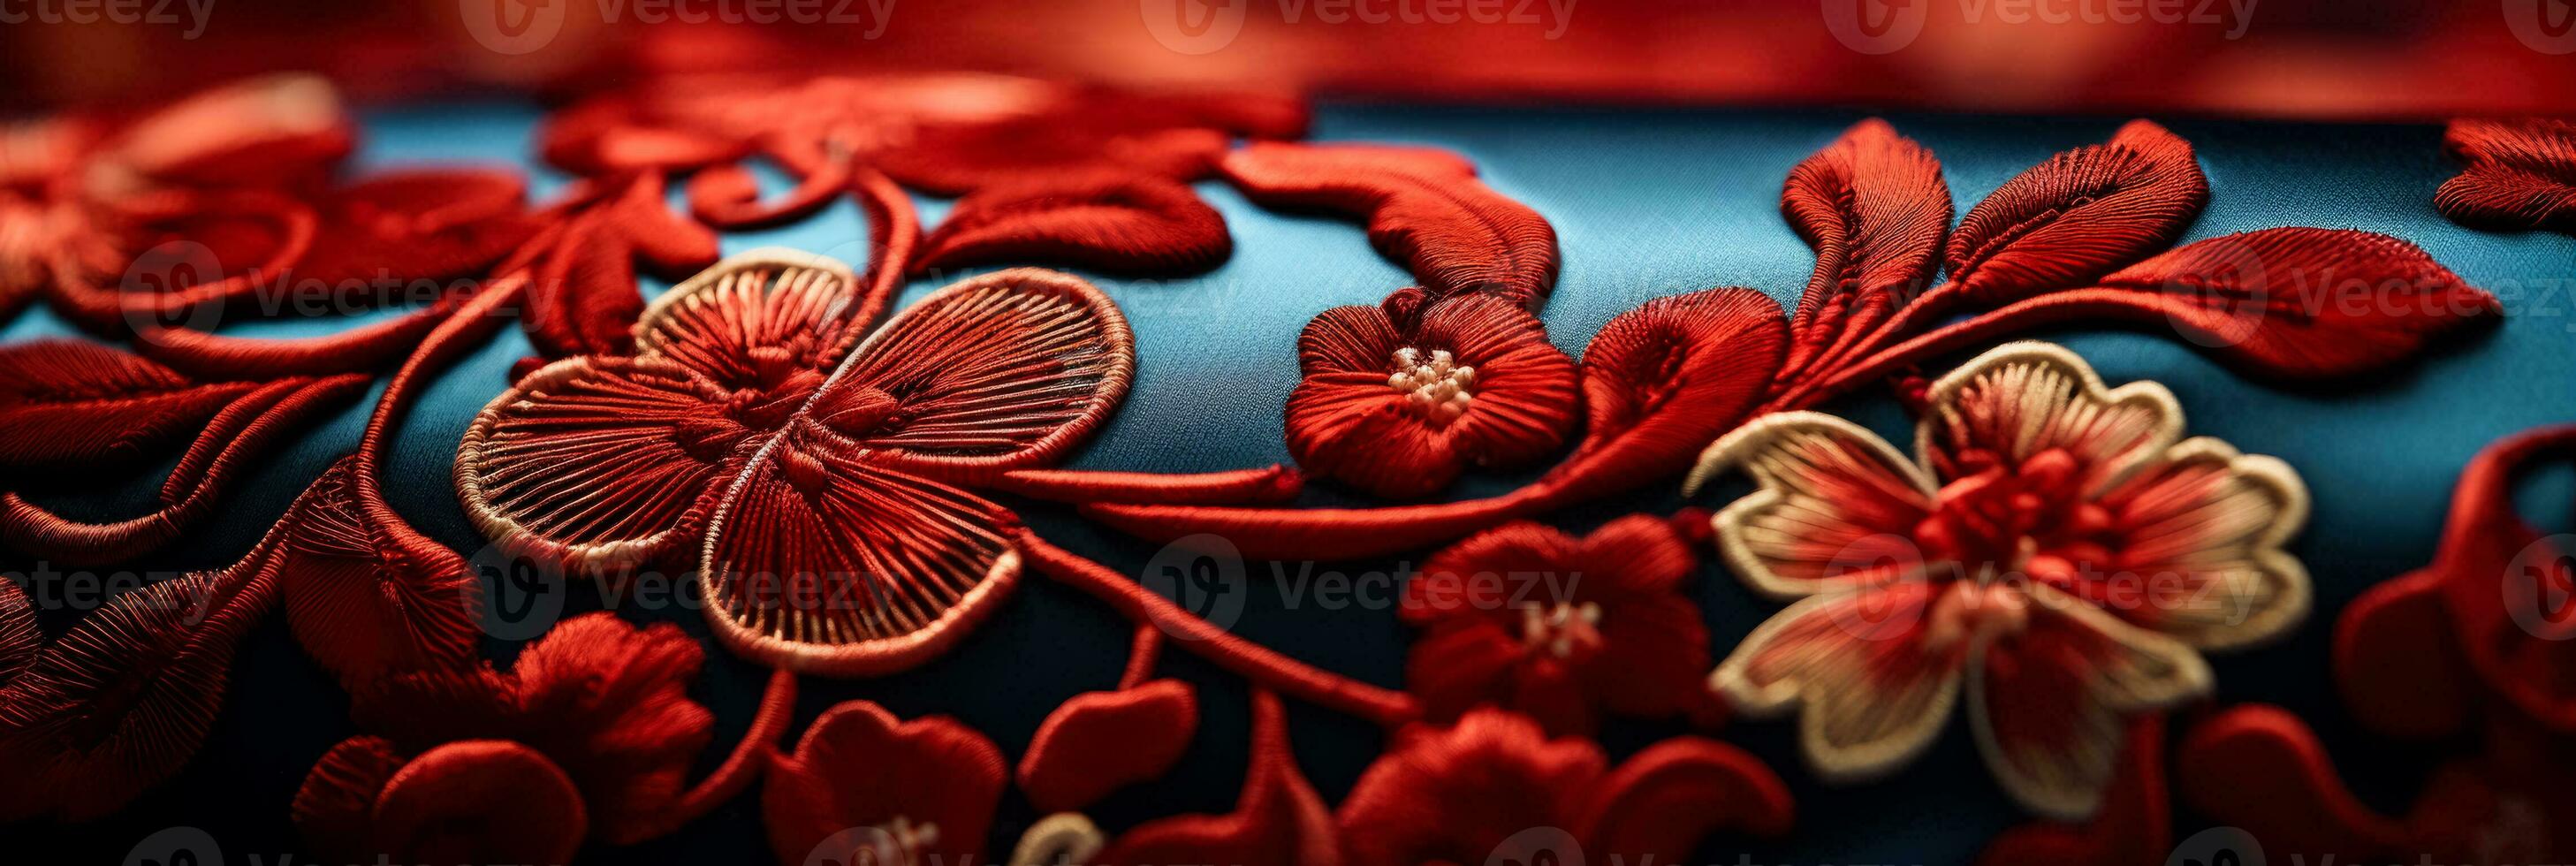 Macro shot of elaborate embroidery on velvet highlighting meticulous threadwork photo